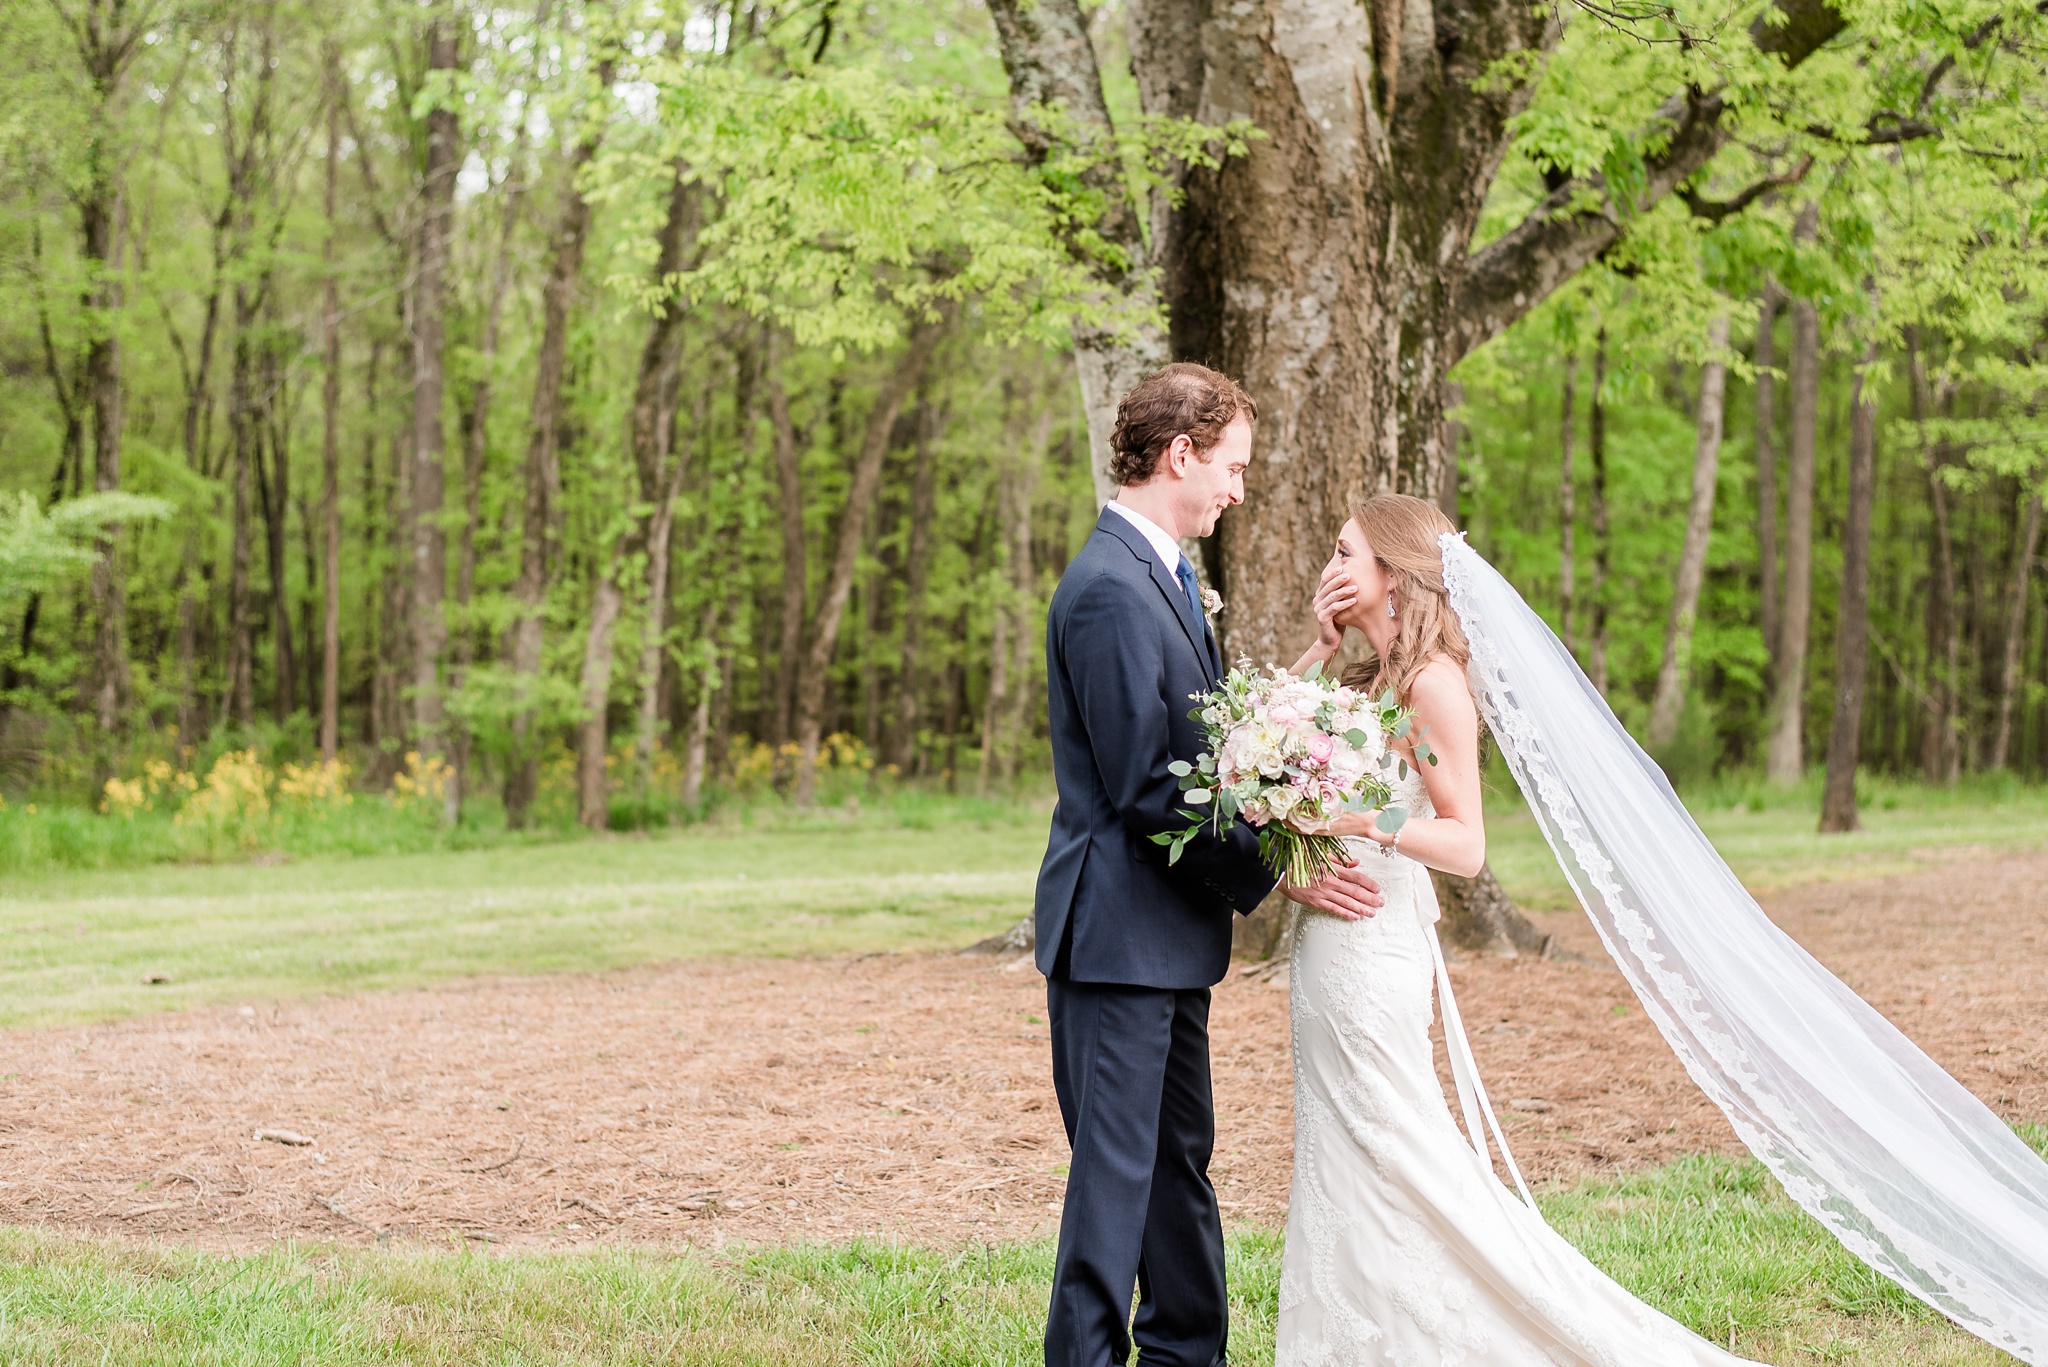 Sonnet House Blush and Gold Spring Wedding | Birmingham Alabama Wedding Photographers_0030.jpg